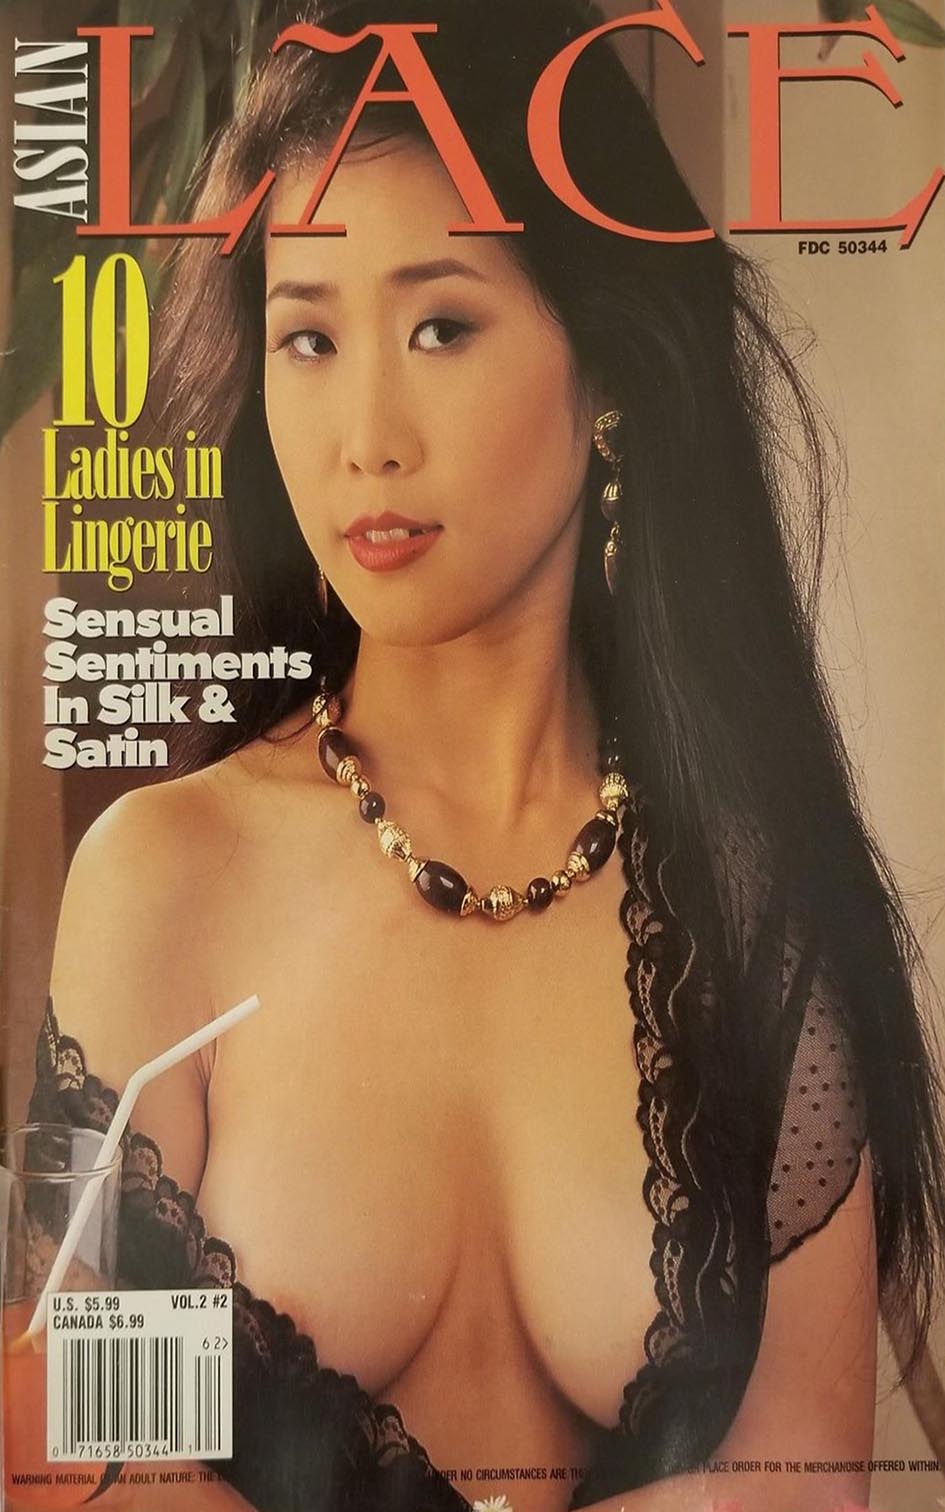 Asian Lace Vol. 2 # 2 magazine back issue Asian Lace magizine back copy 